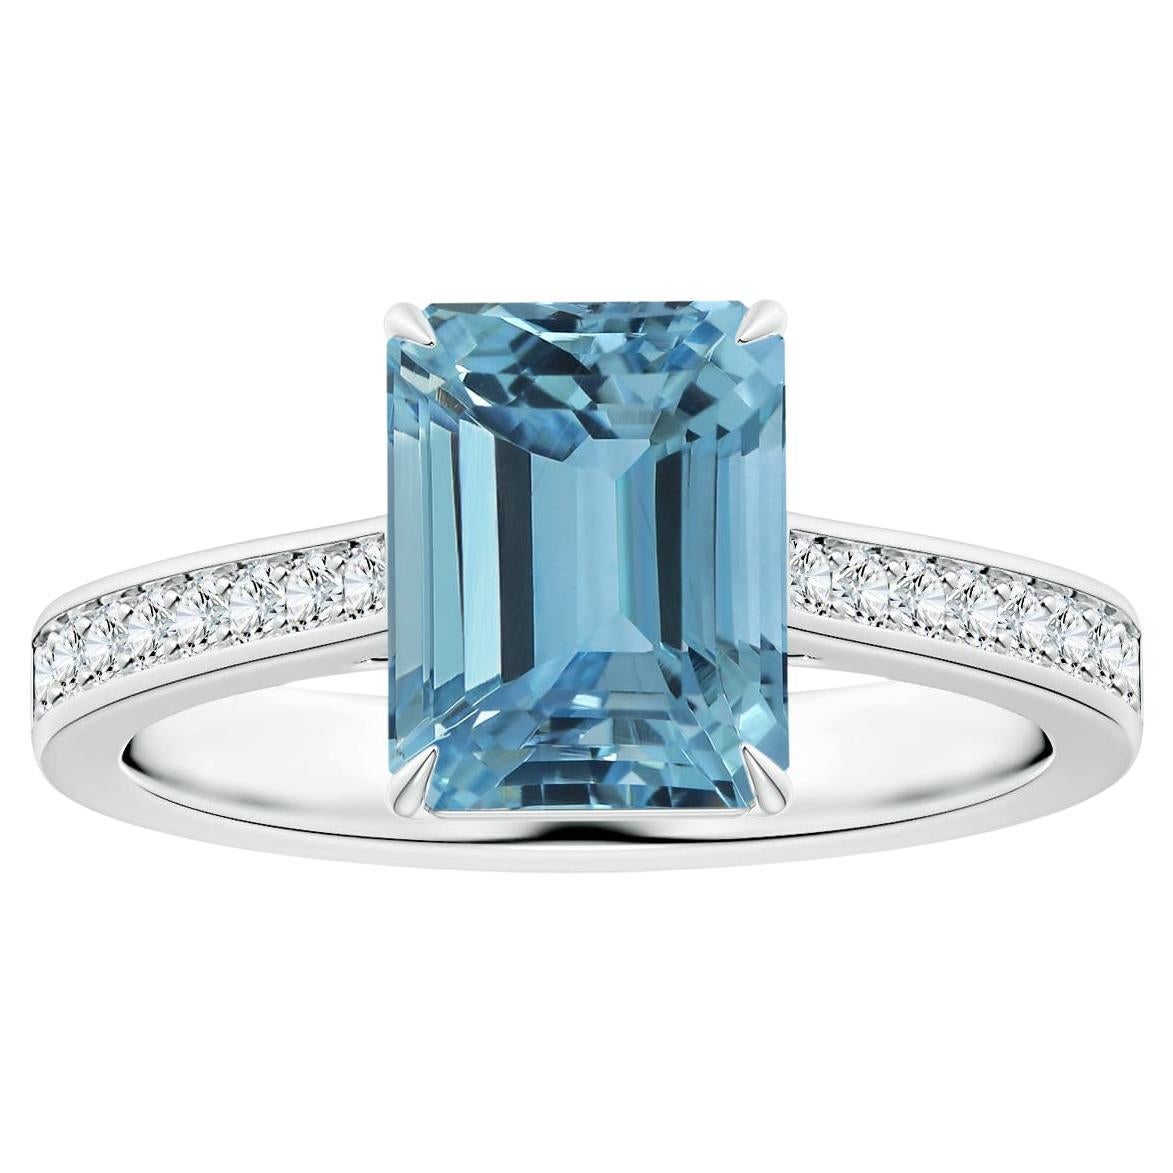 For Sale:  ANGARA GIA Certified Emerald-Cut Aquamarine Ring in Platinum with Diamond Shank